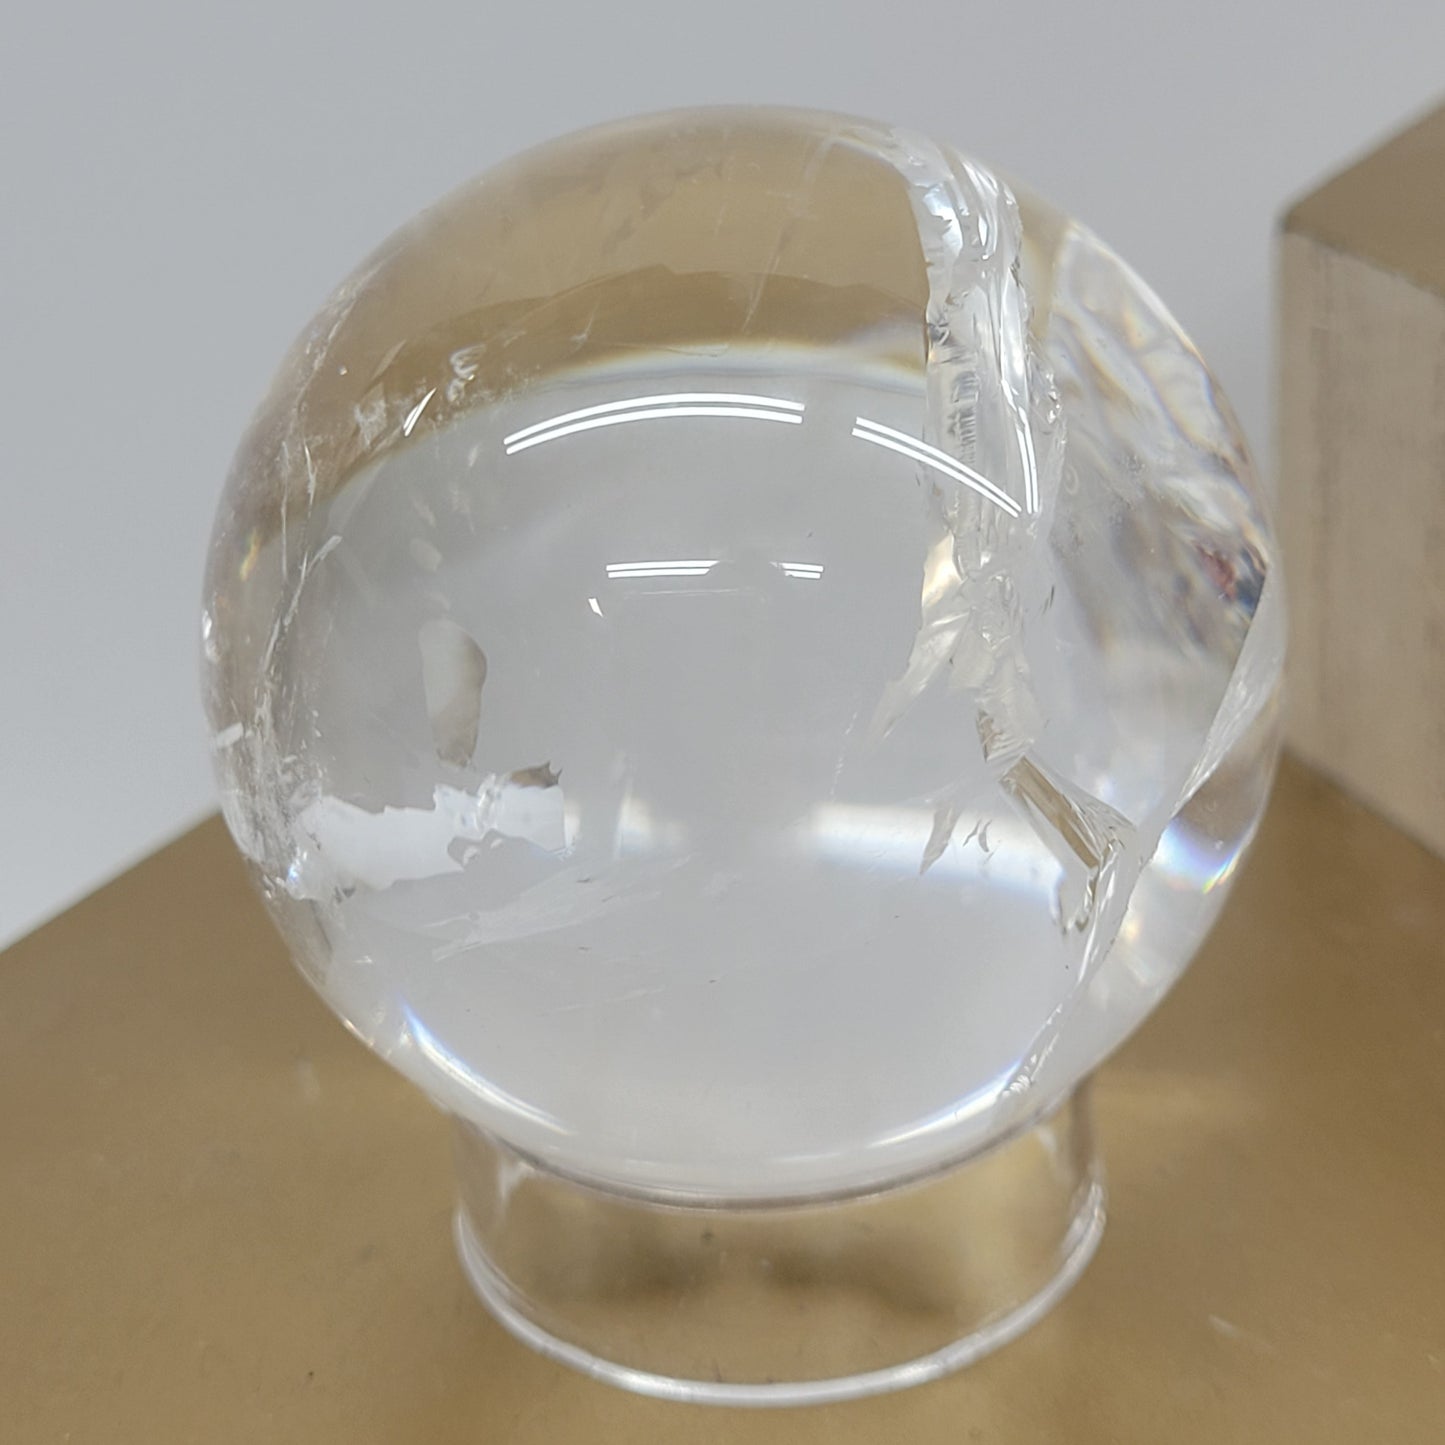 Clear Quartz sphere